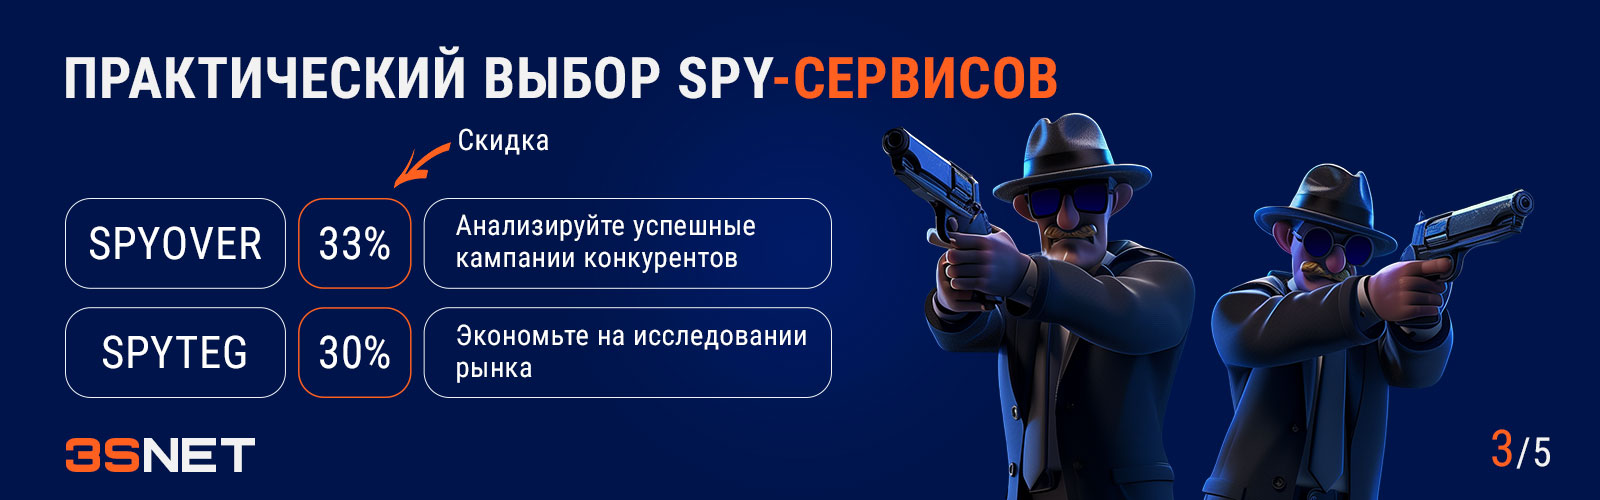 Spy services-3snet-(3)